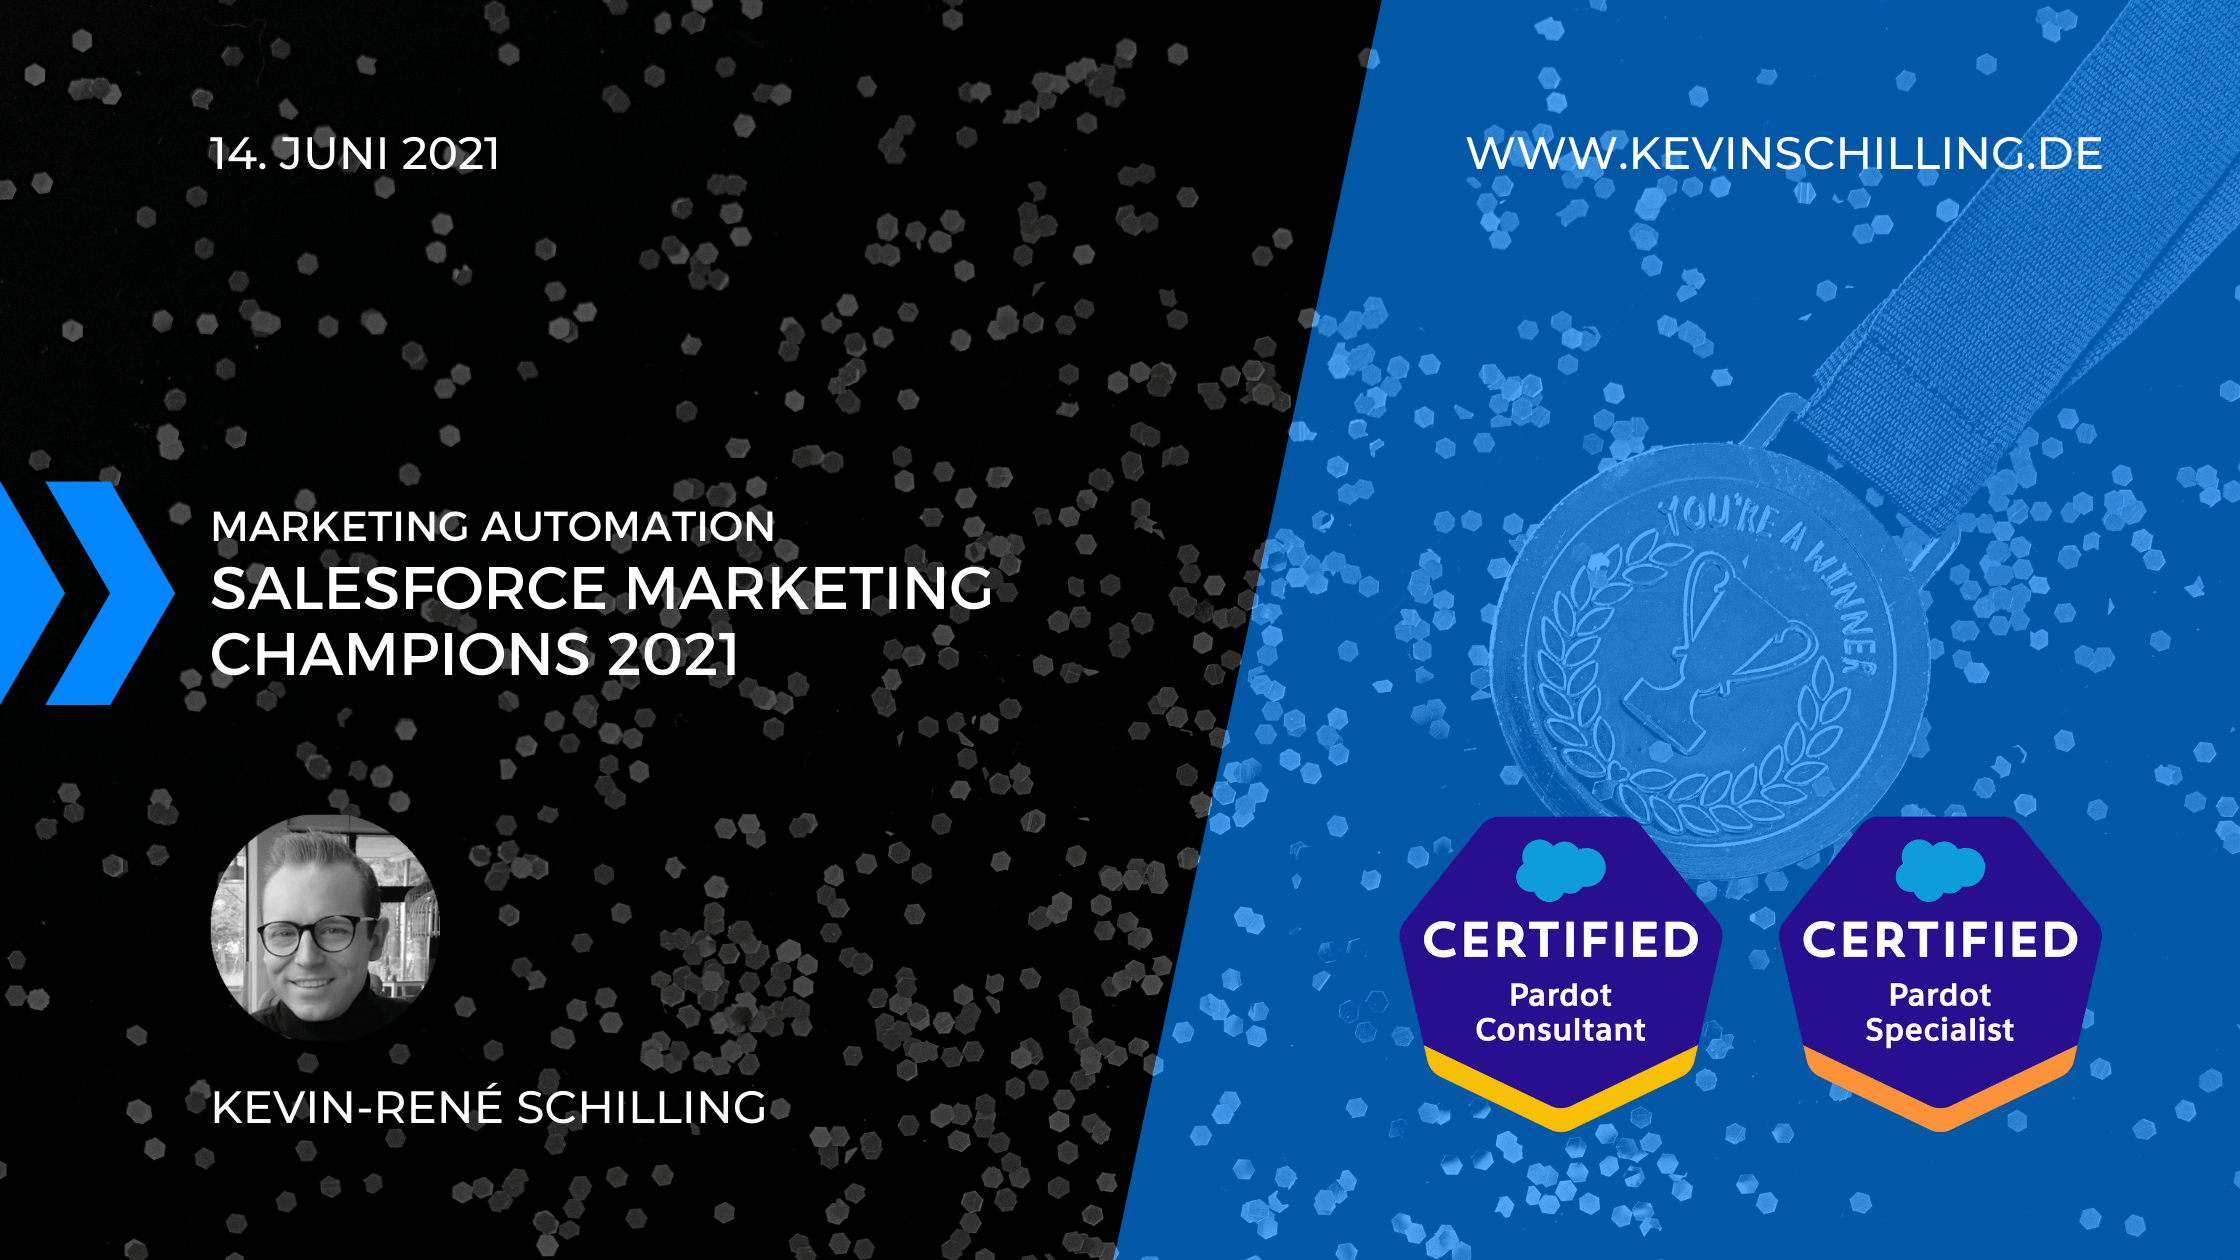 Salesforce Marketing Champion 2021 - Kevin-René Schilling